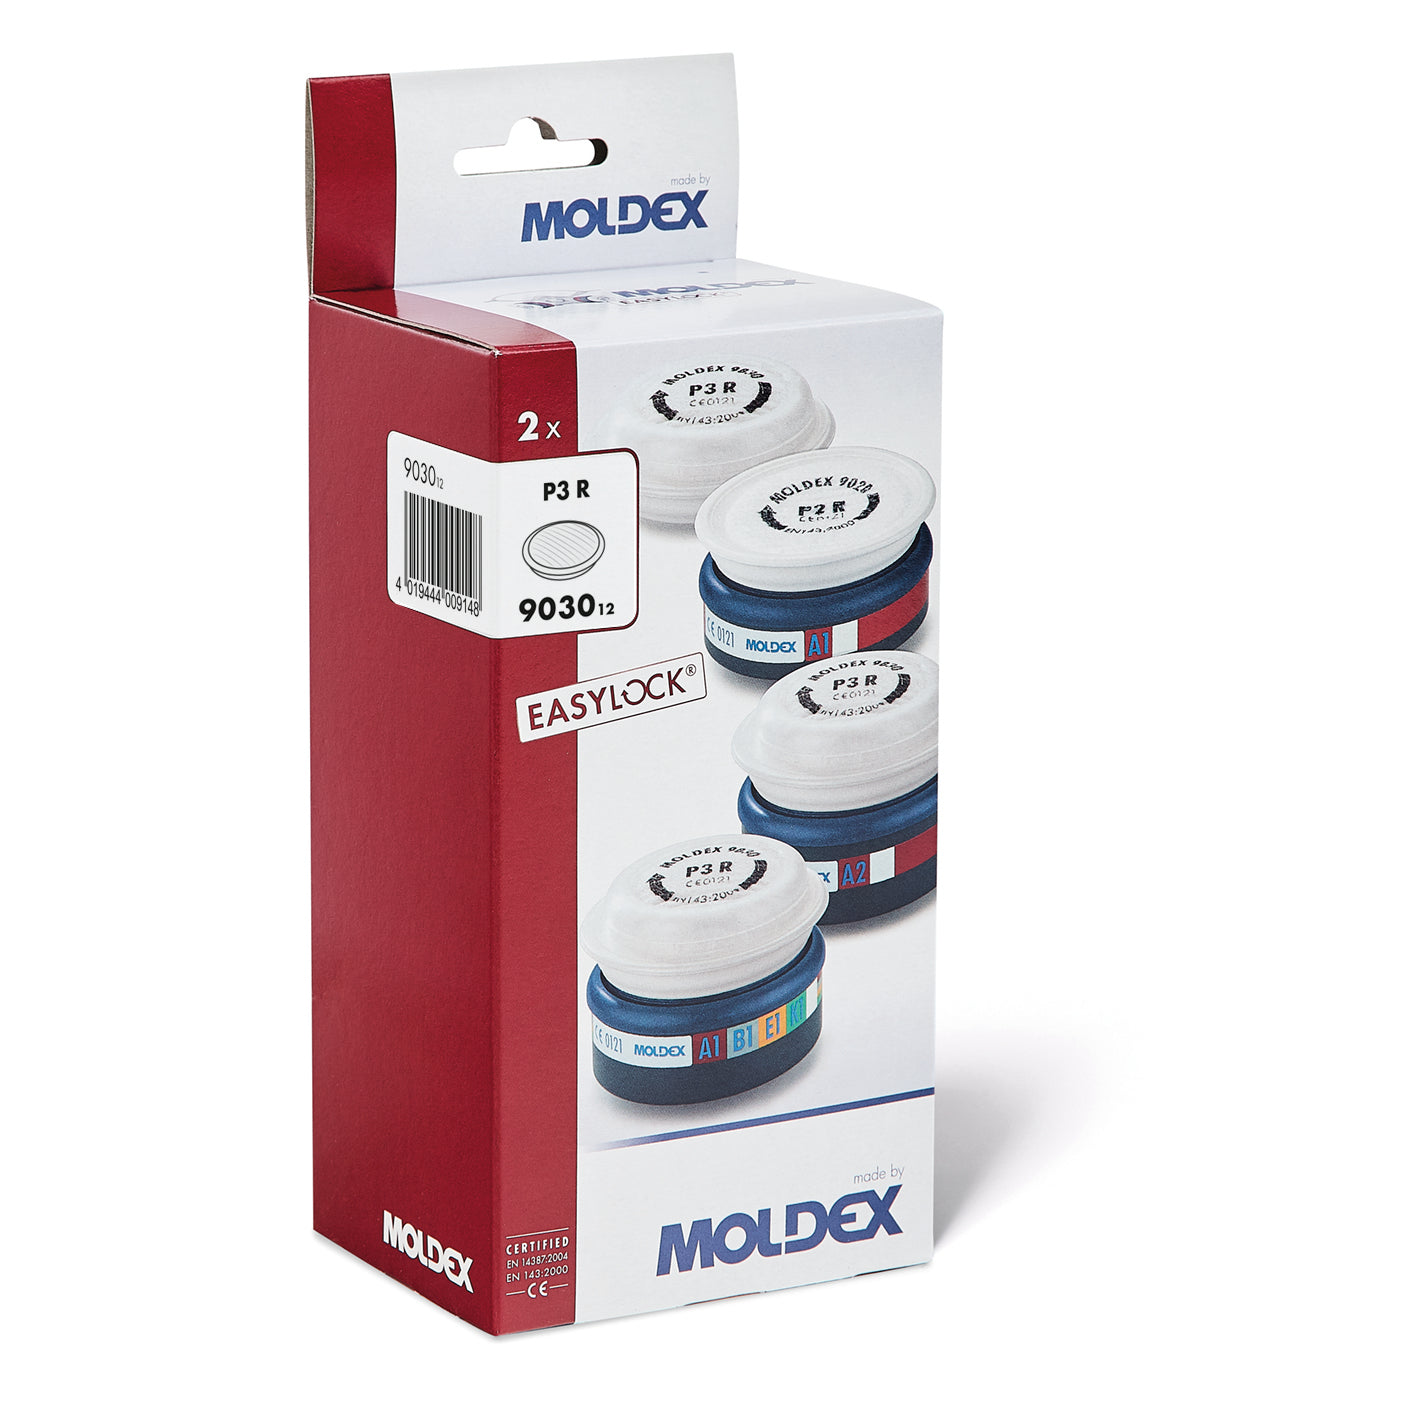 Moldex 903012 - P3 R Particulate Easylock Filter 2-Piece